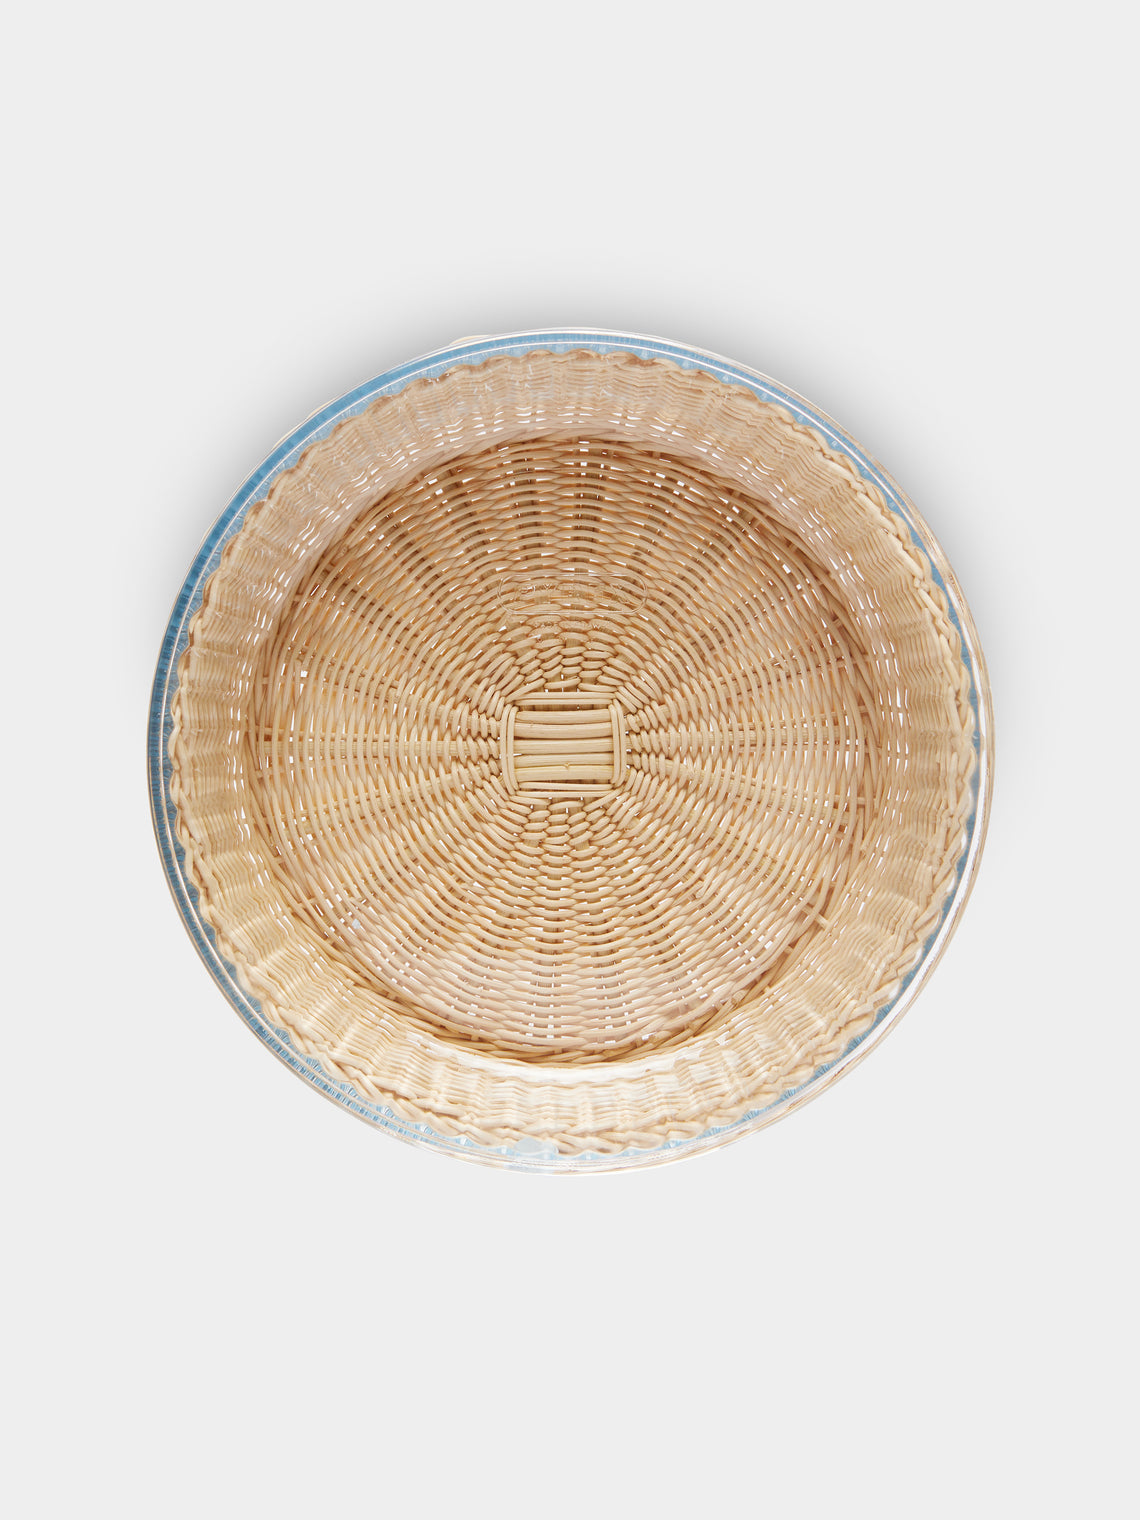 Mila Maurizi - Anemone Handwoven Wicker and Glass Large Baking Dish -  - ABASK